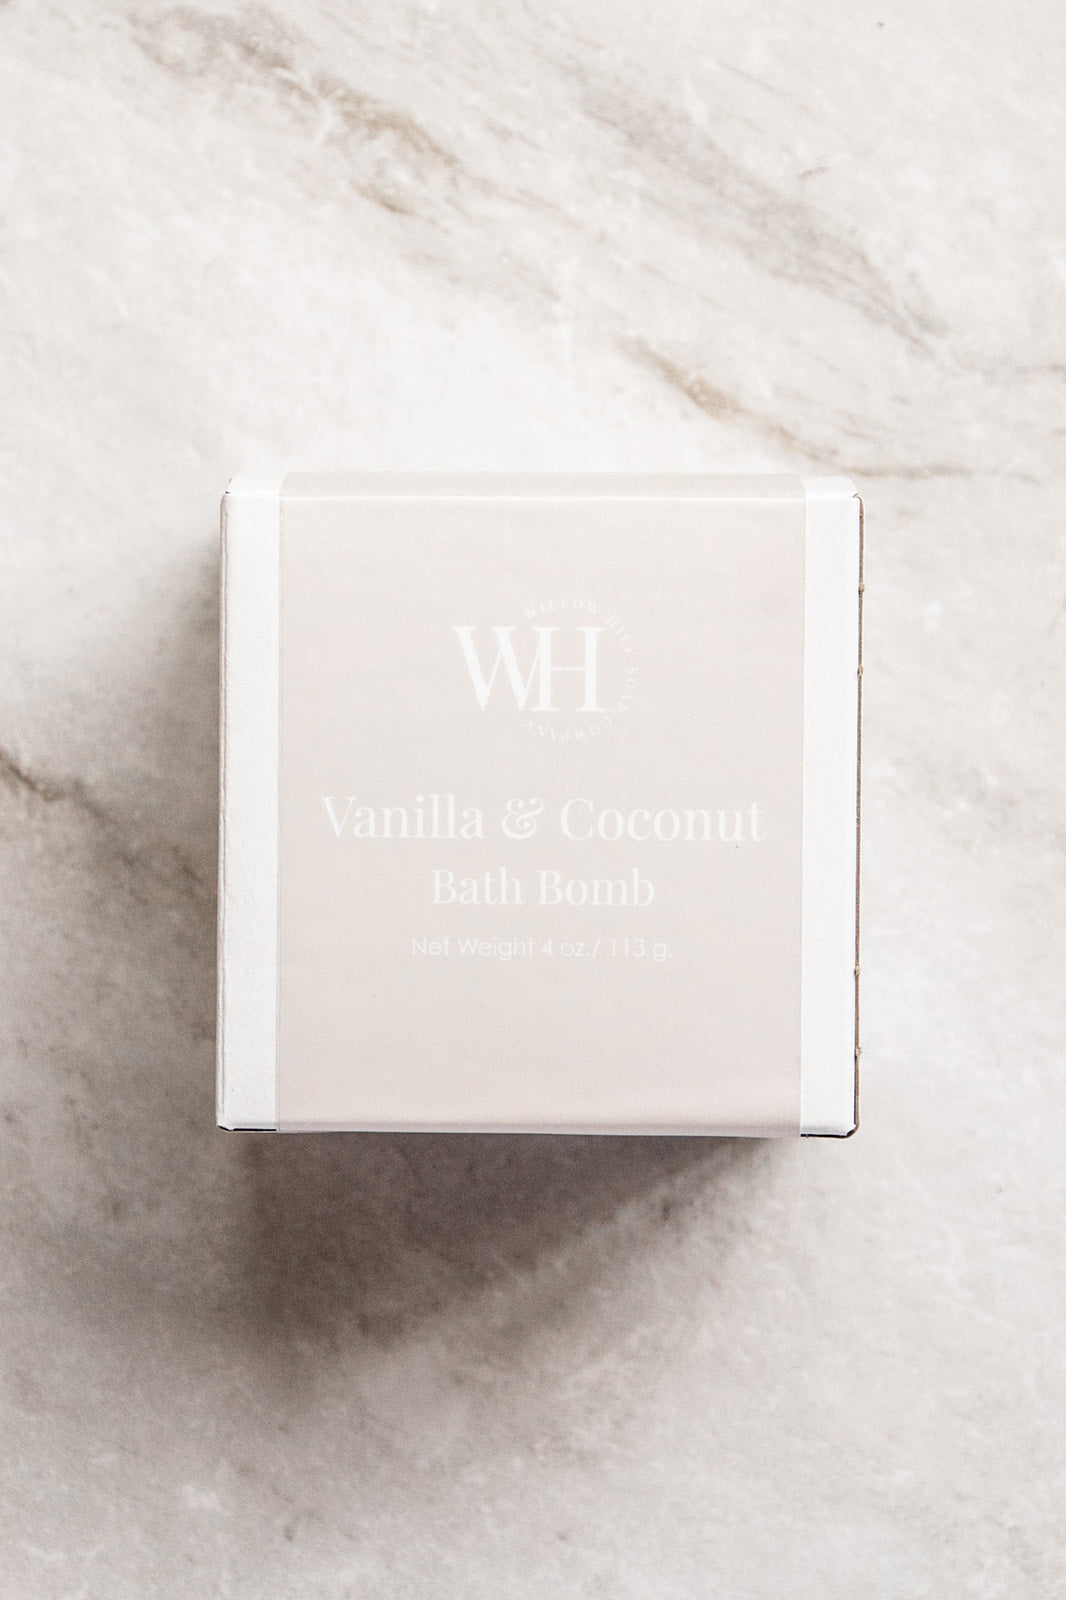 Vanilla & Coconut Bath Bomb